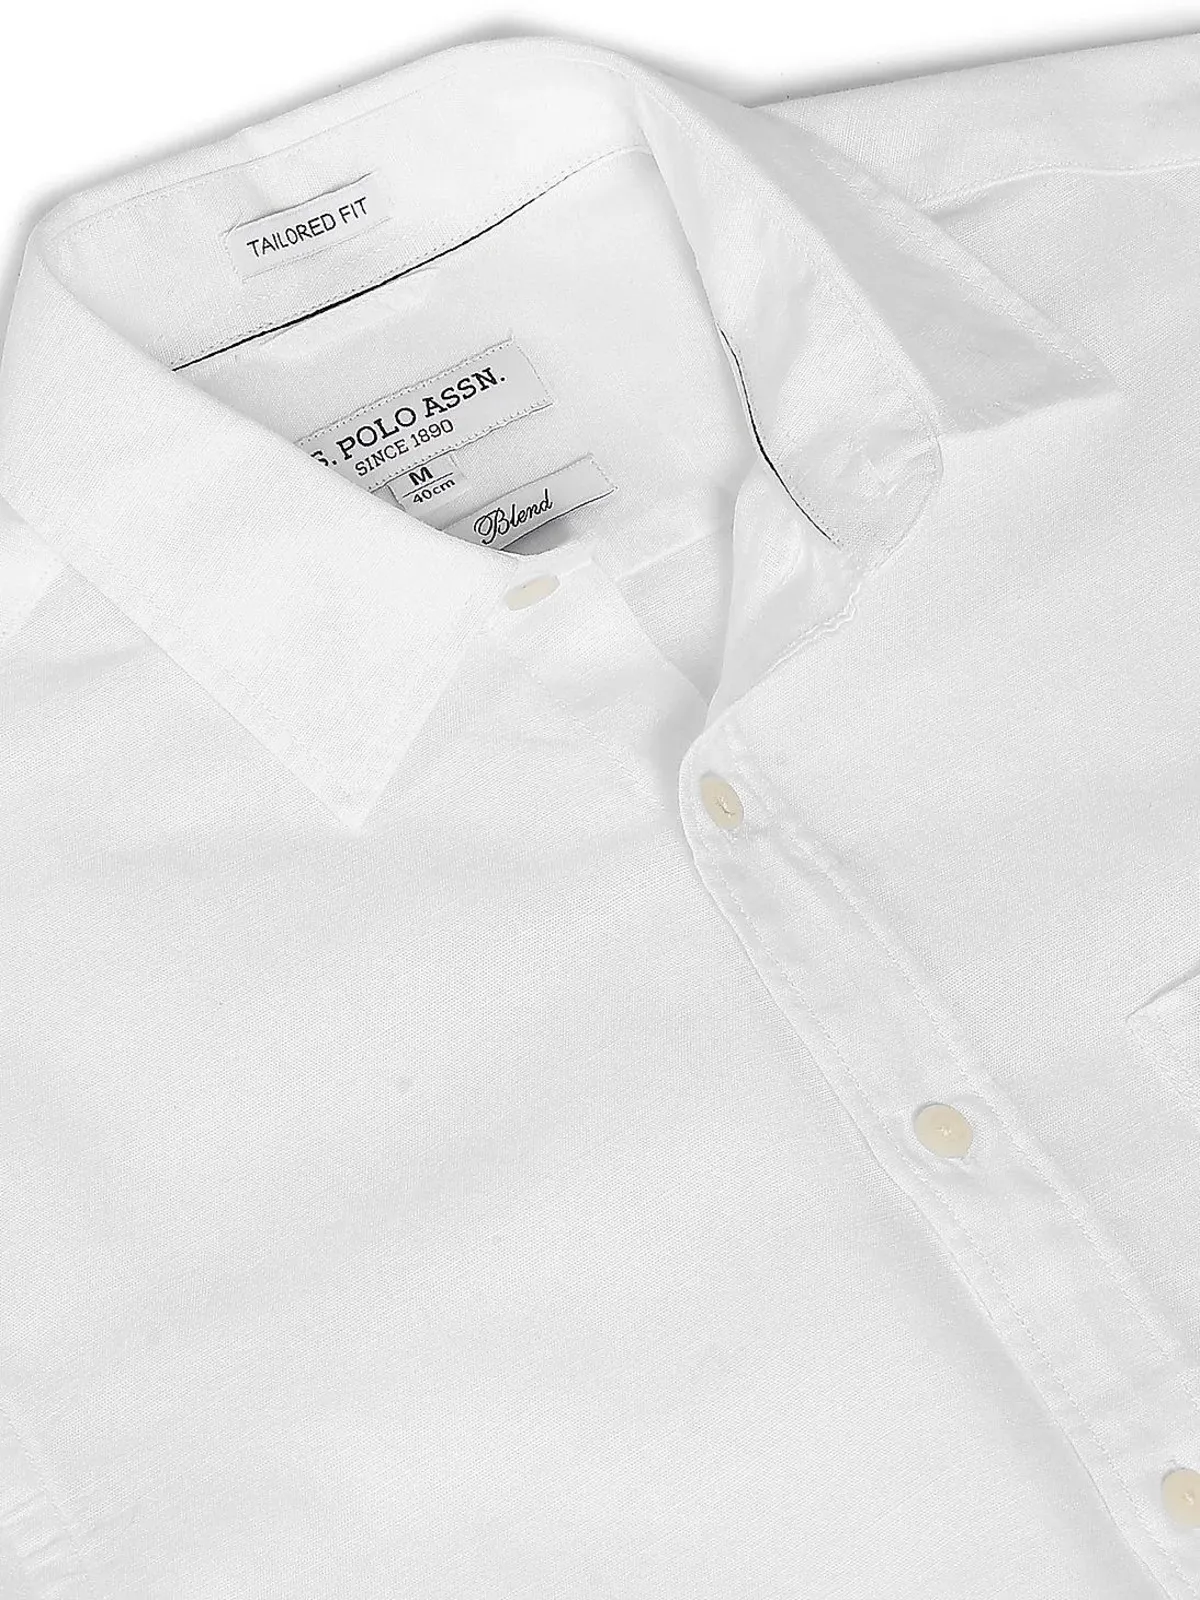 U S POLO ASSN plain white shirt in linen